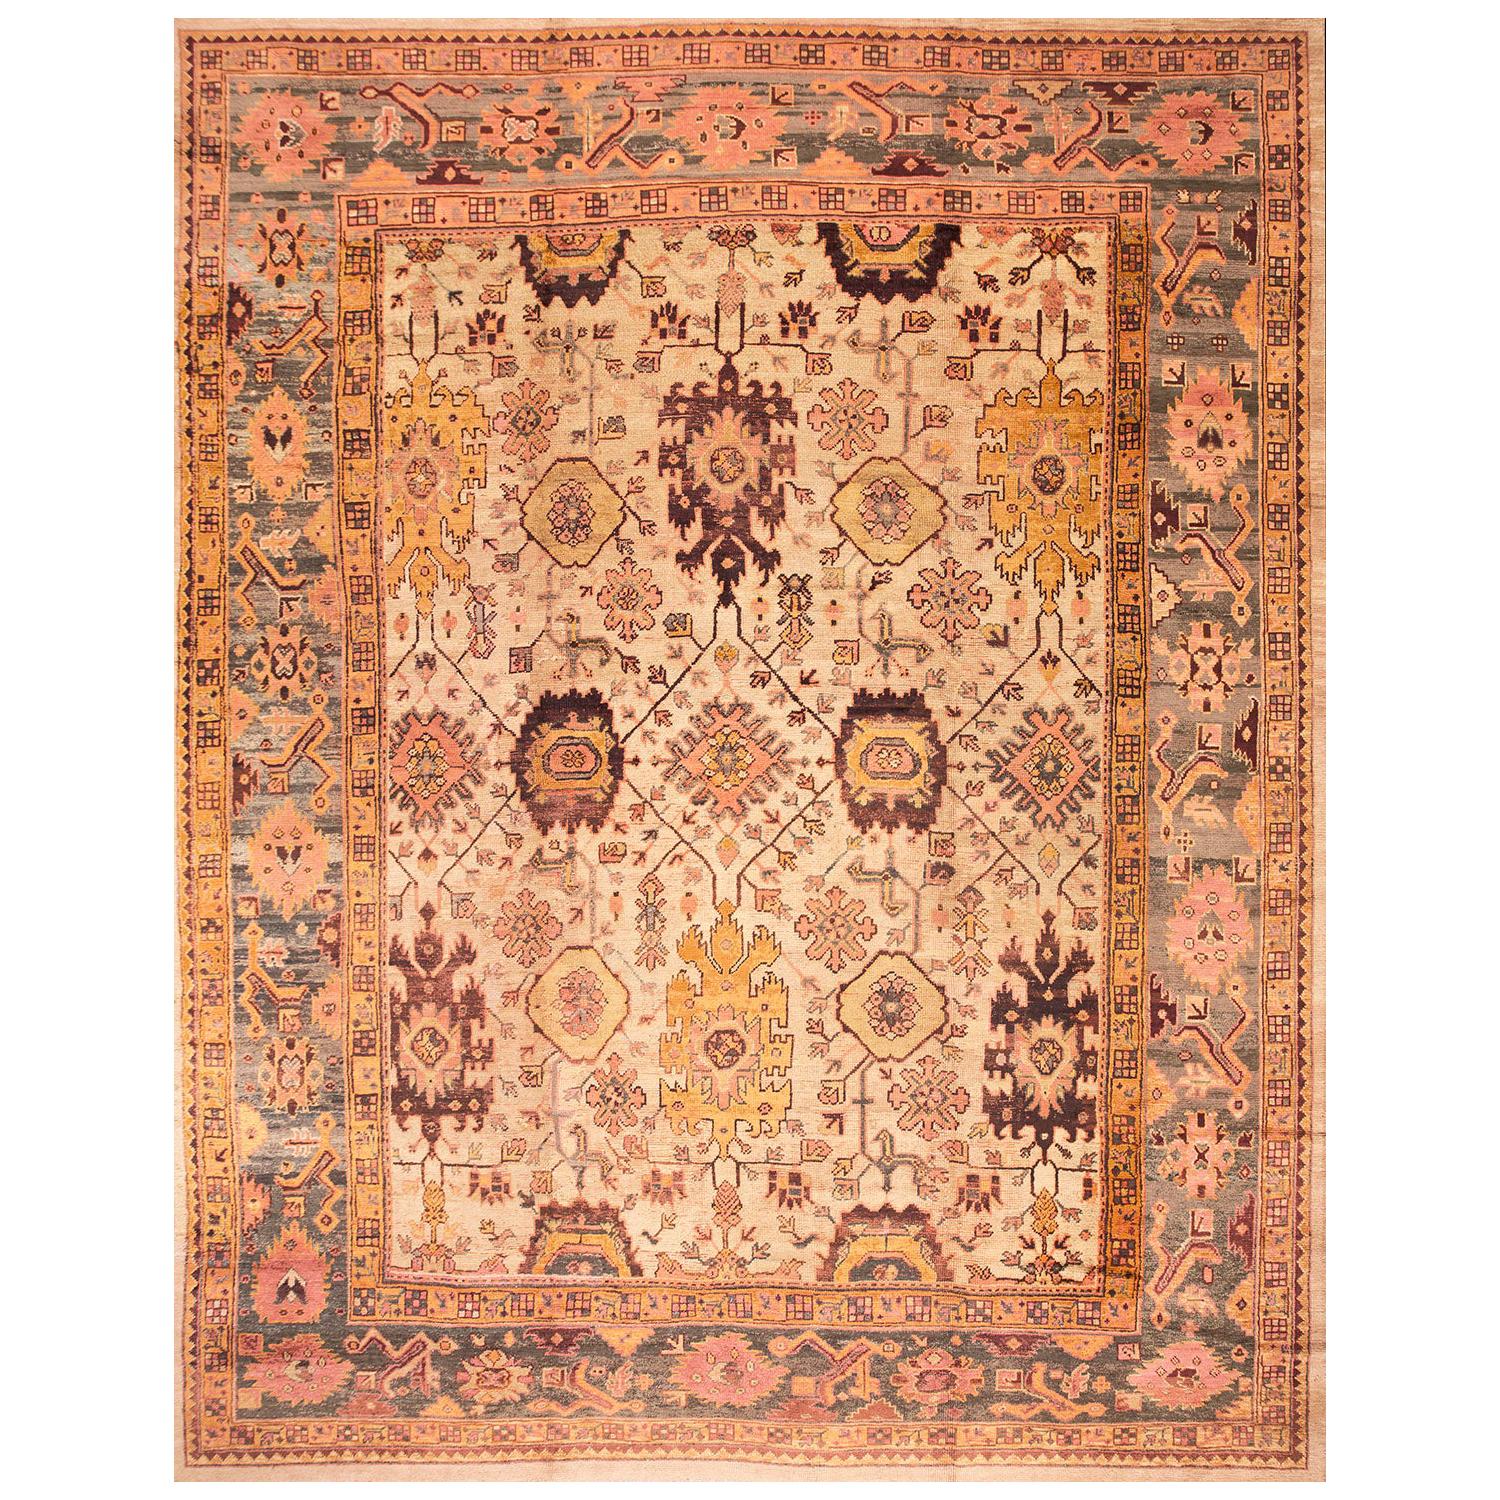 Early 20 Century Turkish Oushak Carpet ( 13' x 16'4" - 395 x 498 ) For Sale